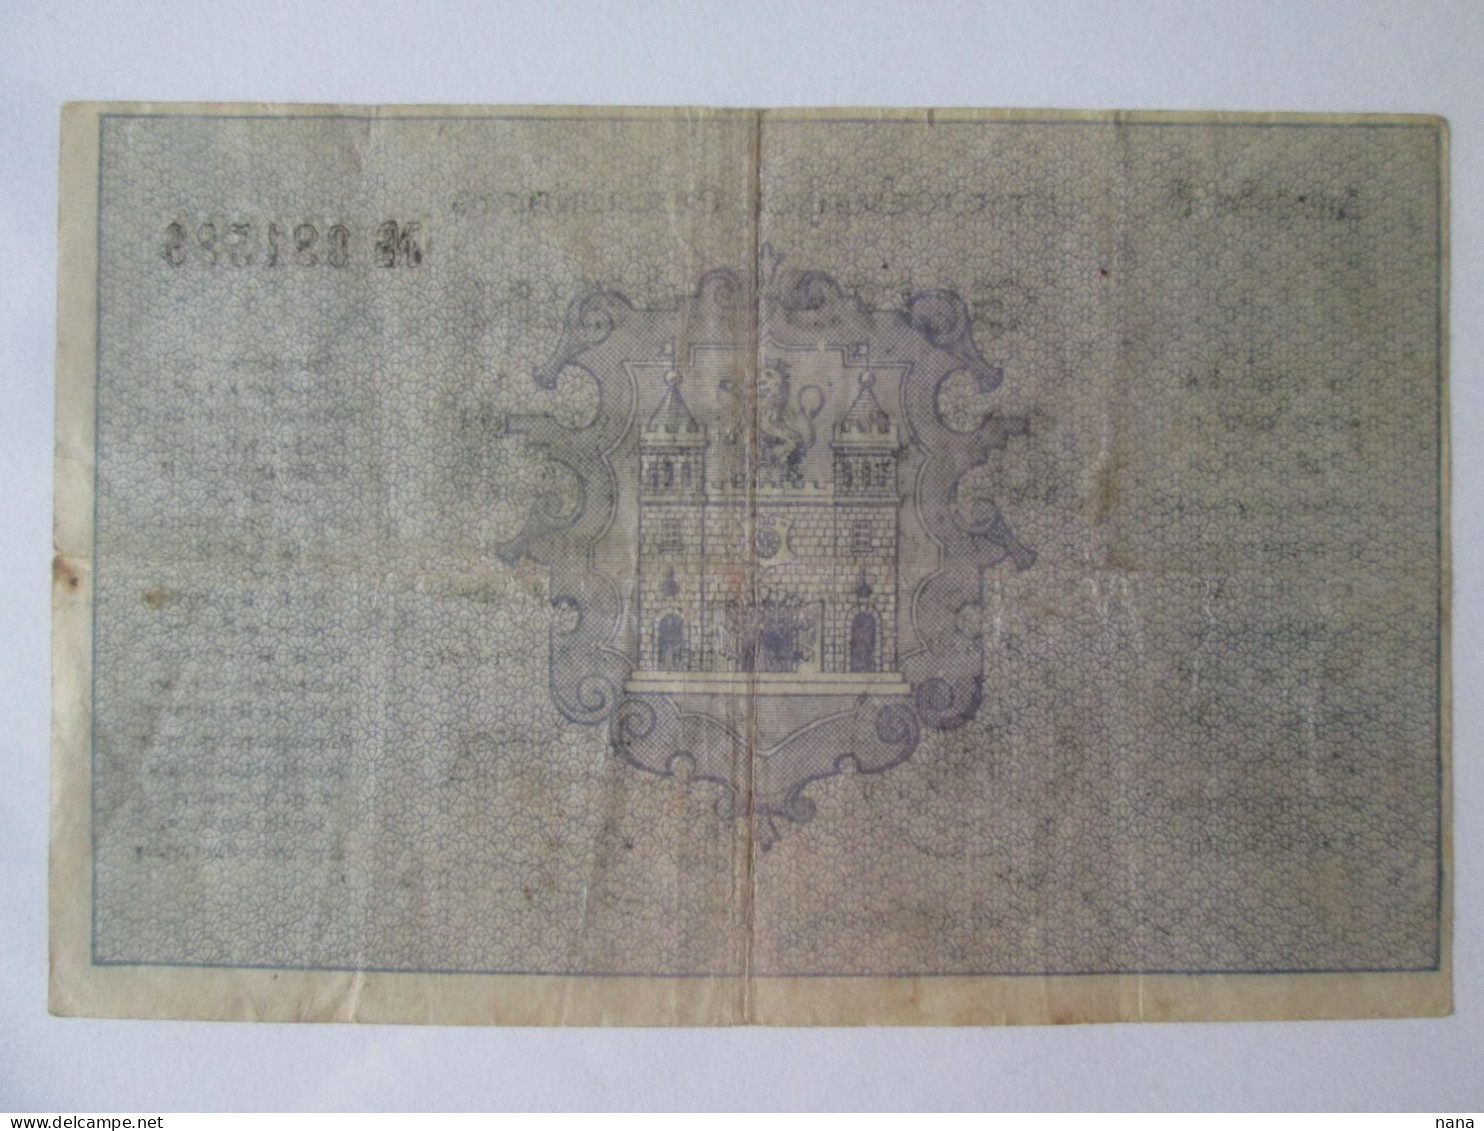 Czech Republic-Liberec/Reichenberg 10 Kronen 1919 Banknote Austrian Occupation WWI - Czech Republic